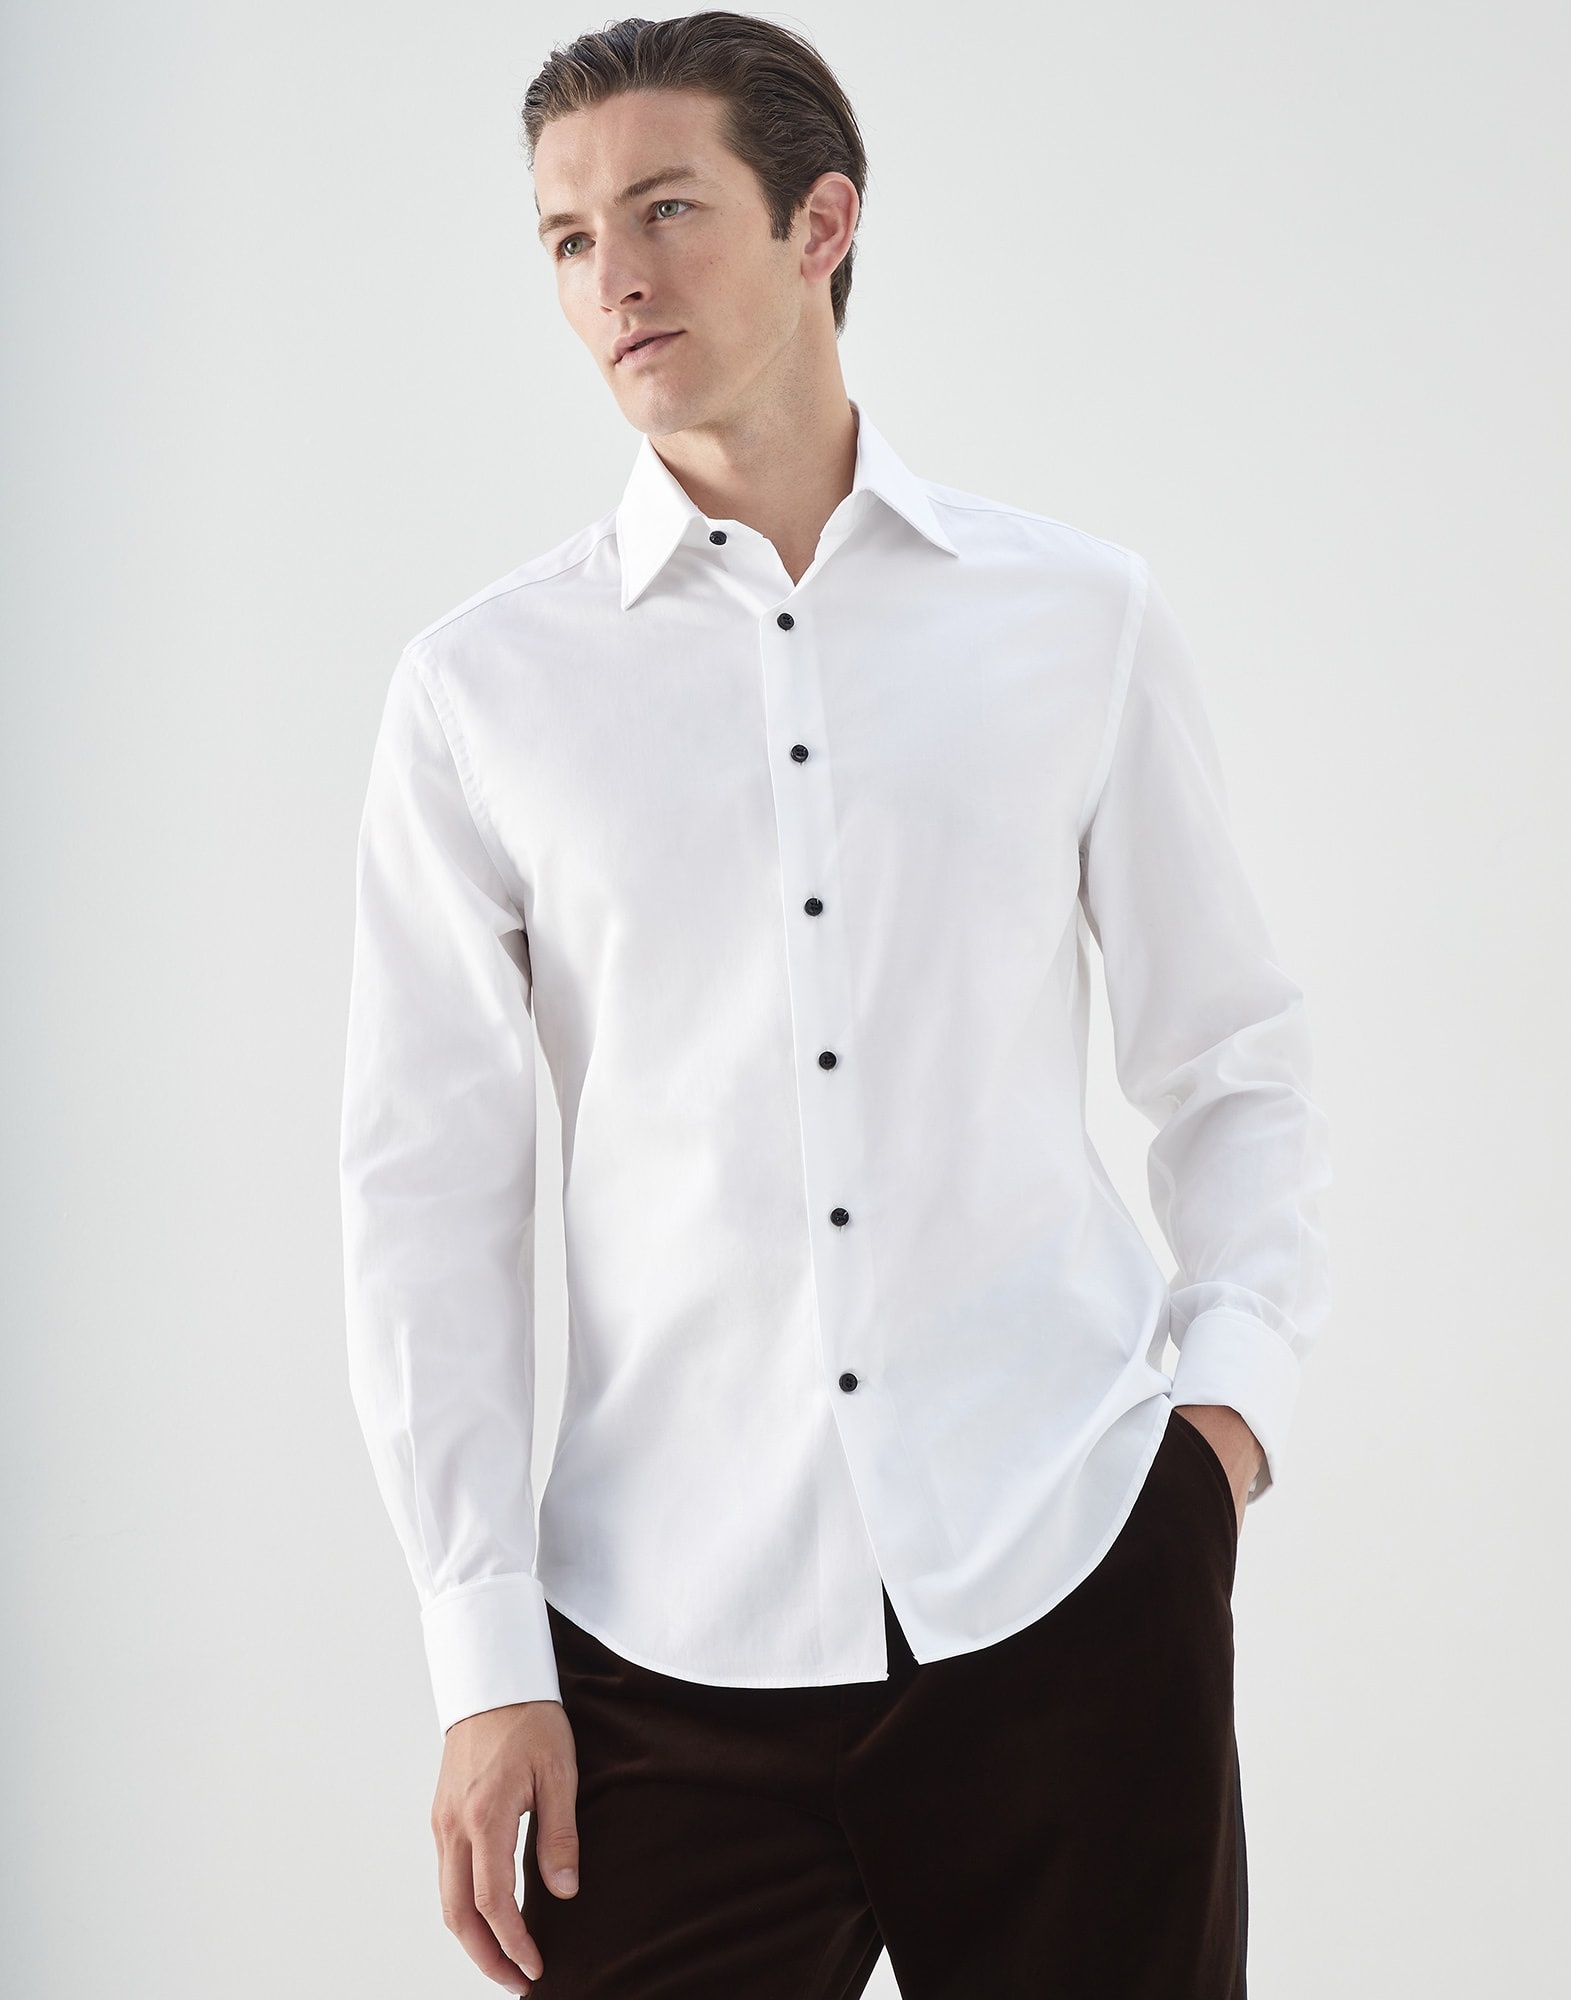 Sea Island cotton twill slim fit tuxedo shirt with spread collar - 1